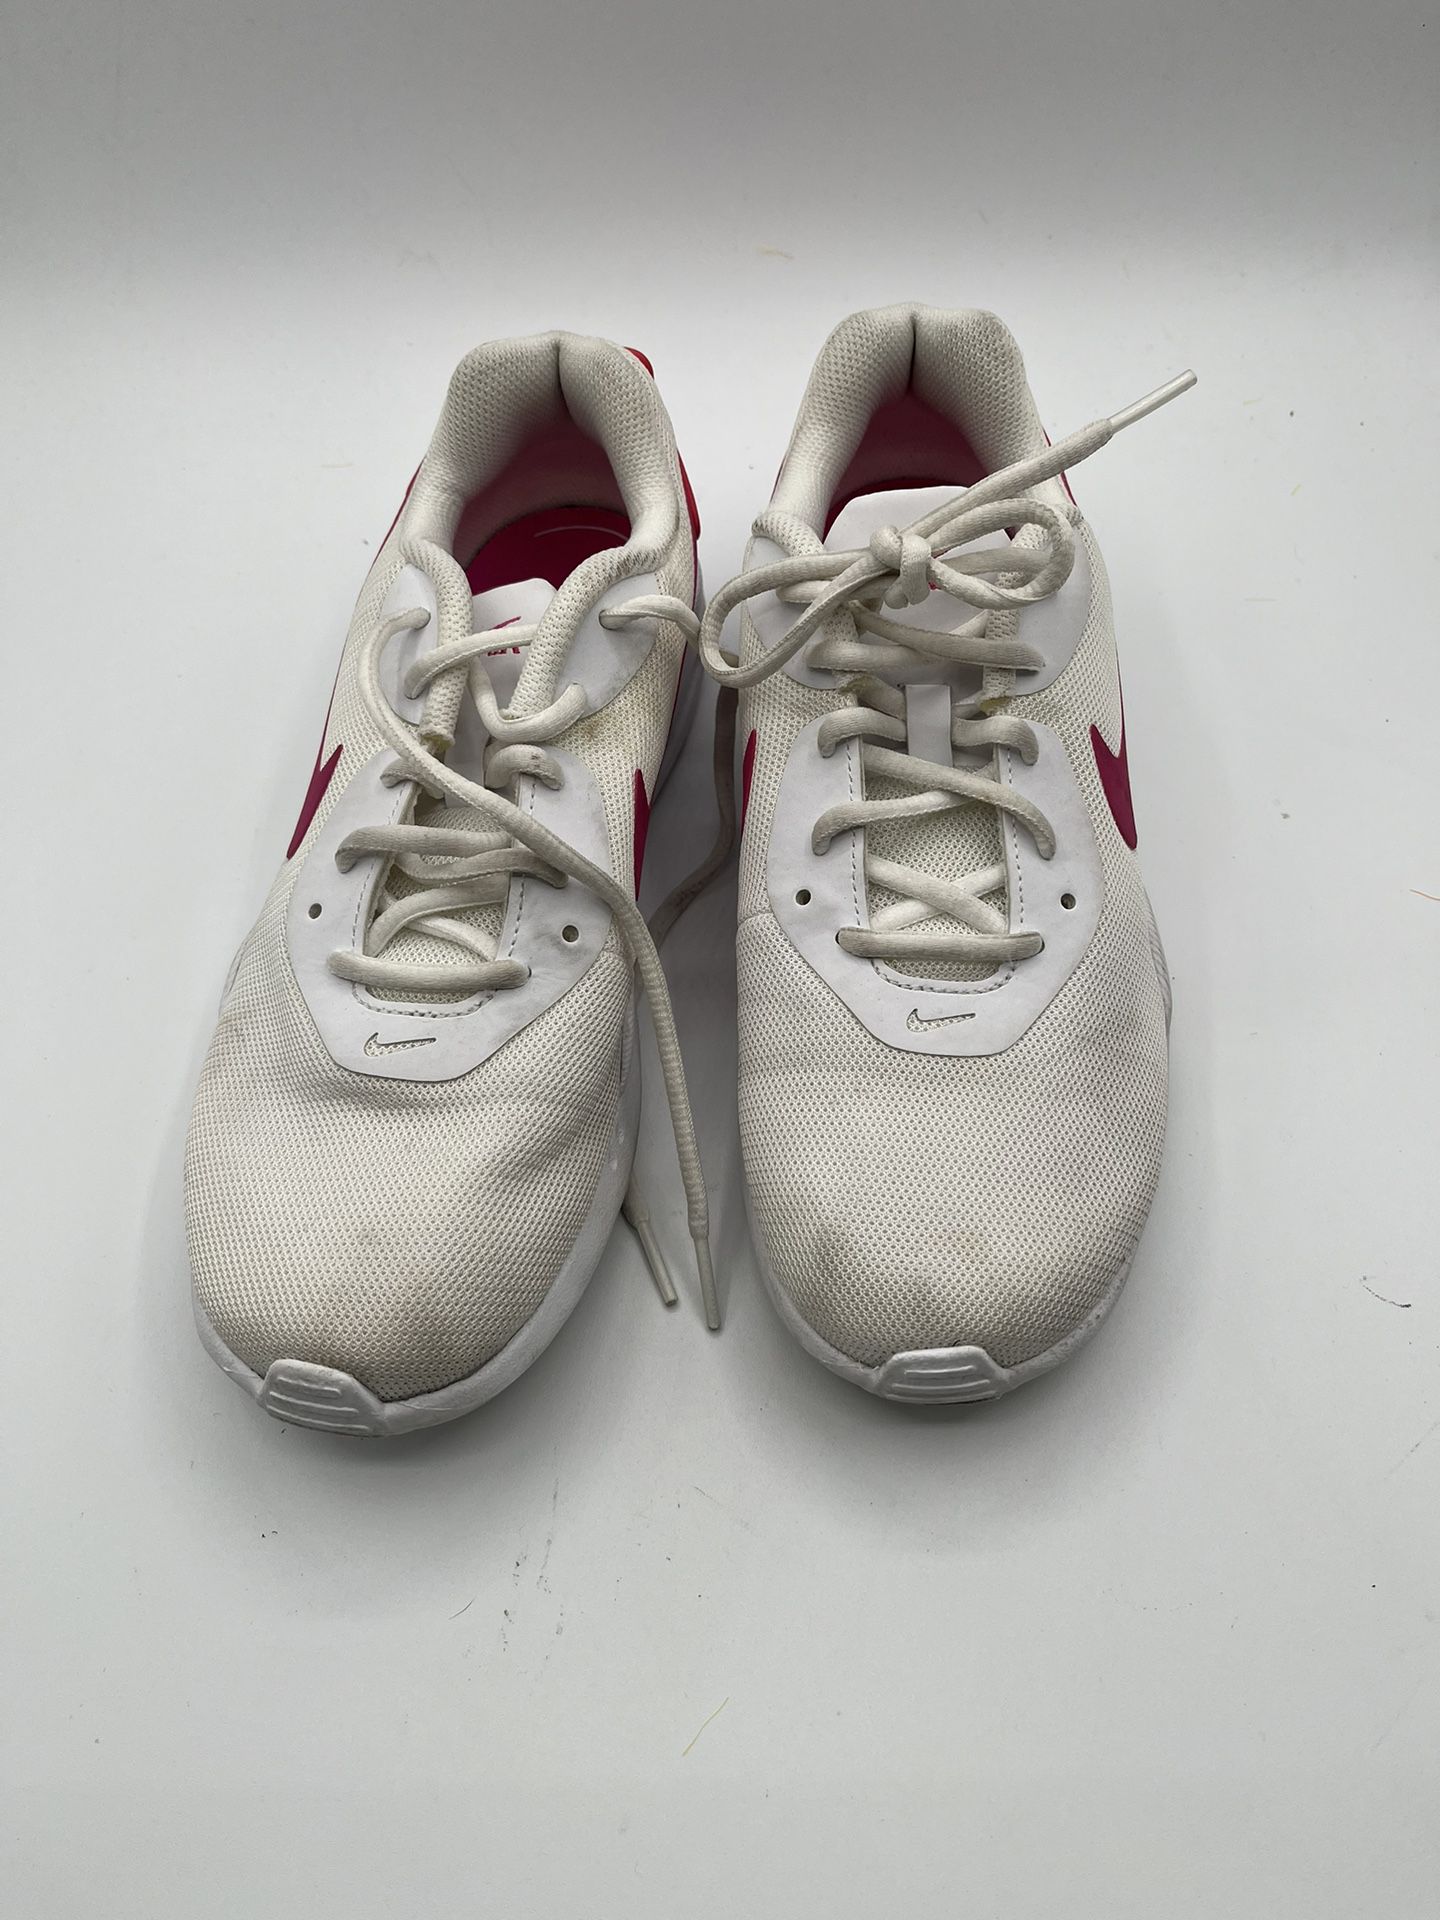 Nike Air Oketo AQ 2231-103 White Pink Tennis Shoes Size 9